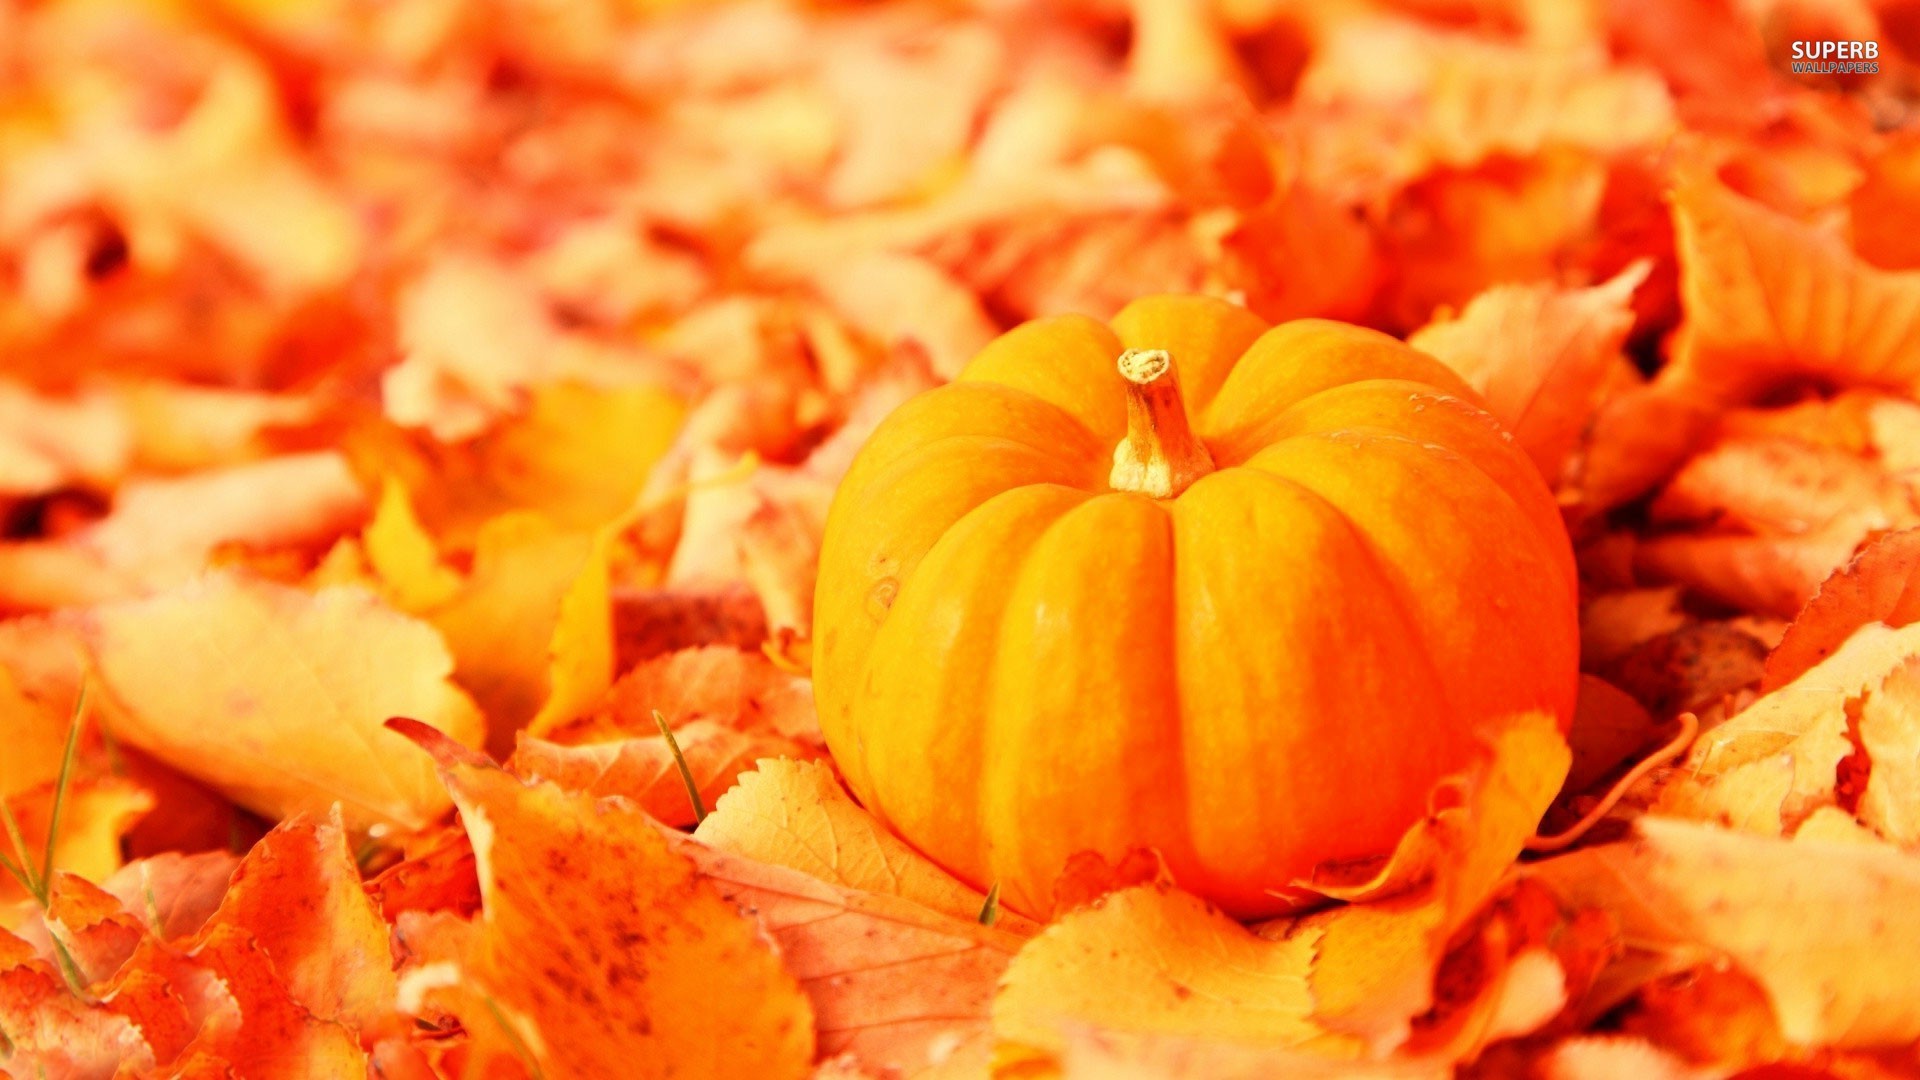 Fall Pumpkin Wallpaper And Screensavers Image